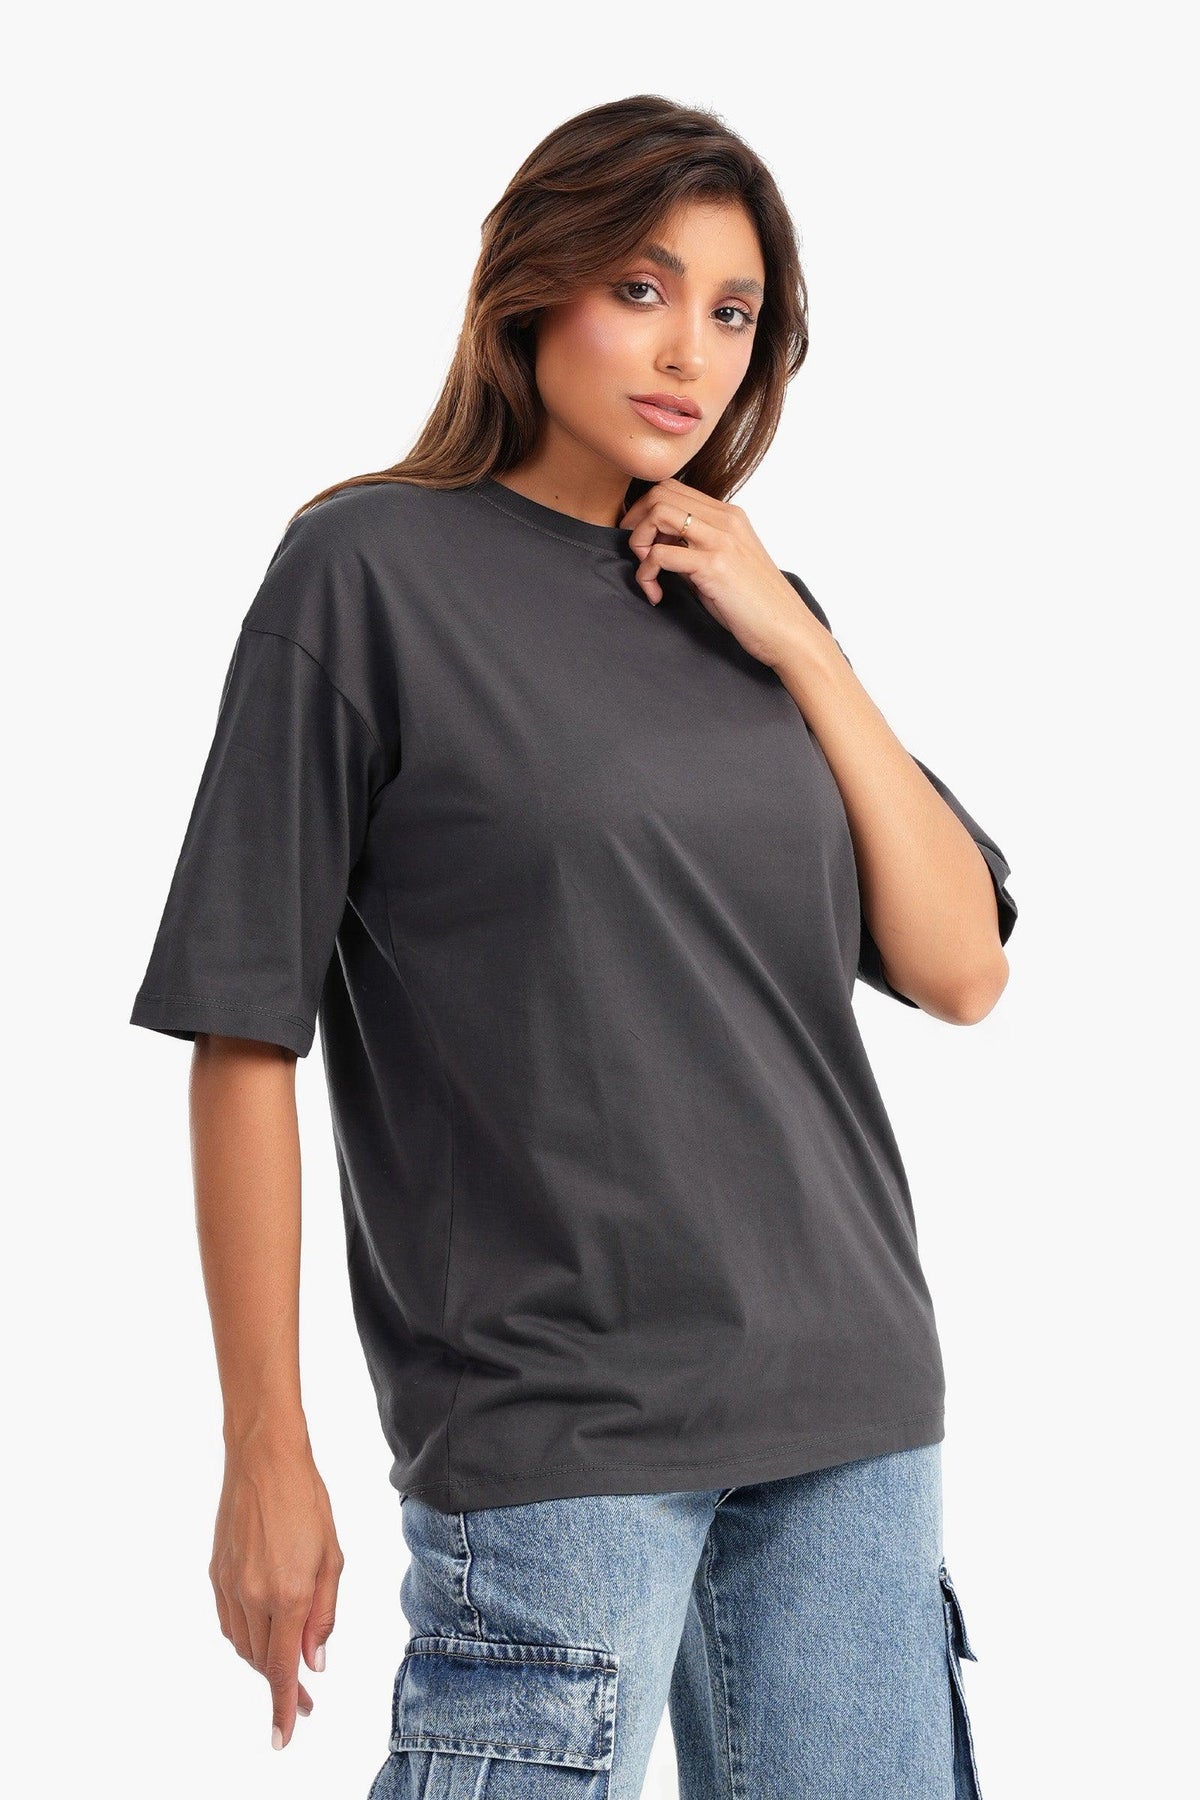 Cotton Comfy Basic T-Shirt - Carina - كارينا